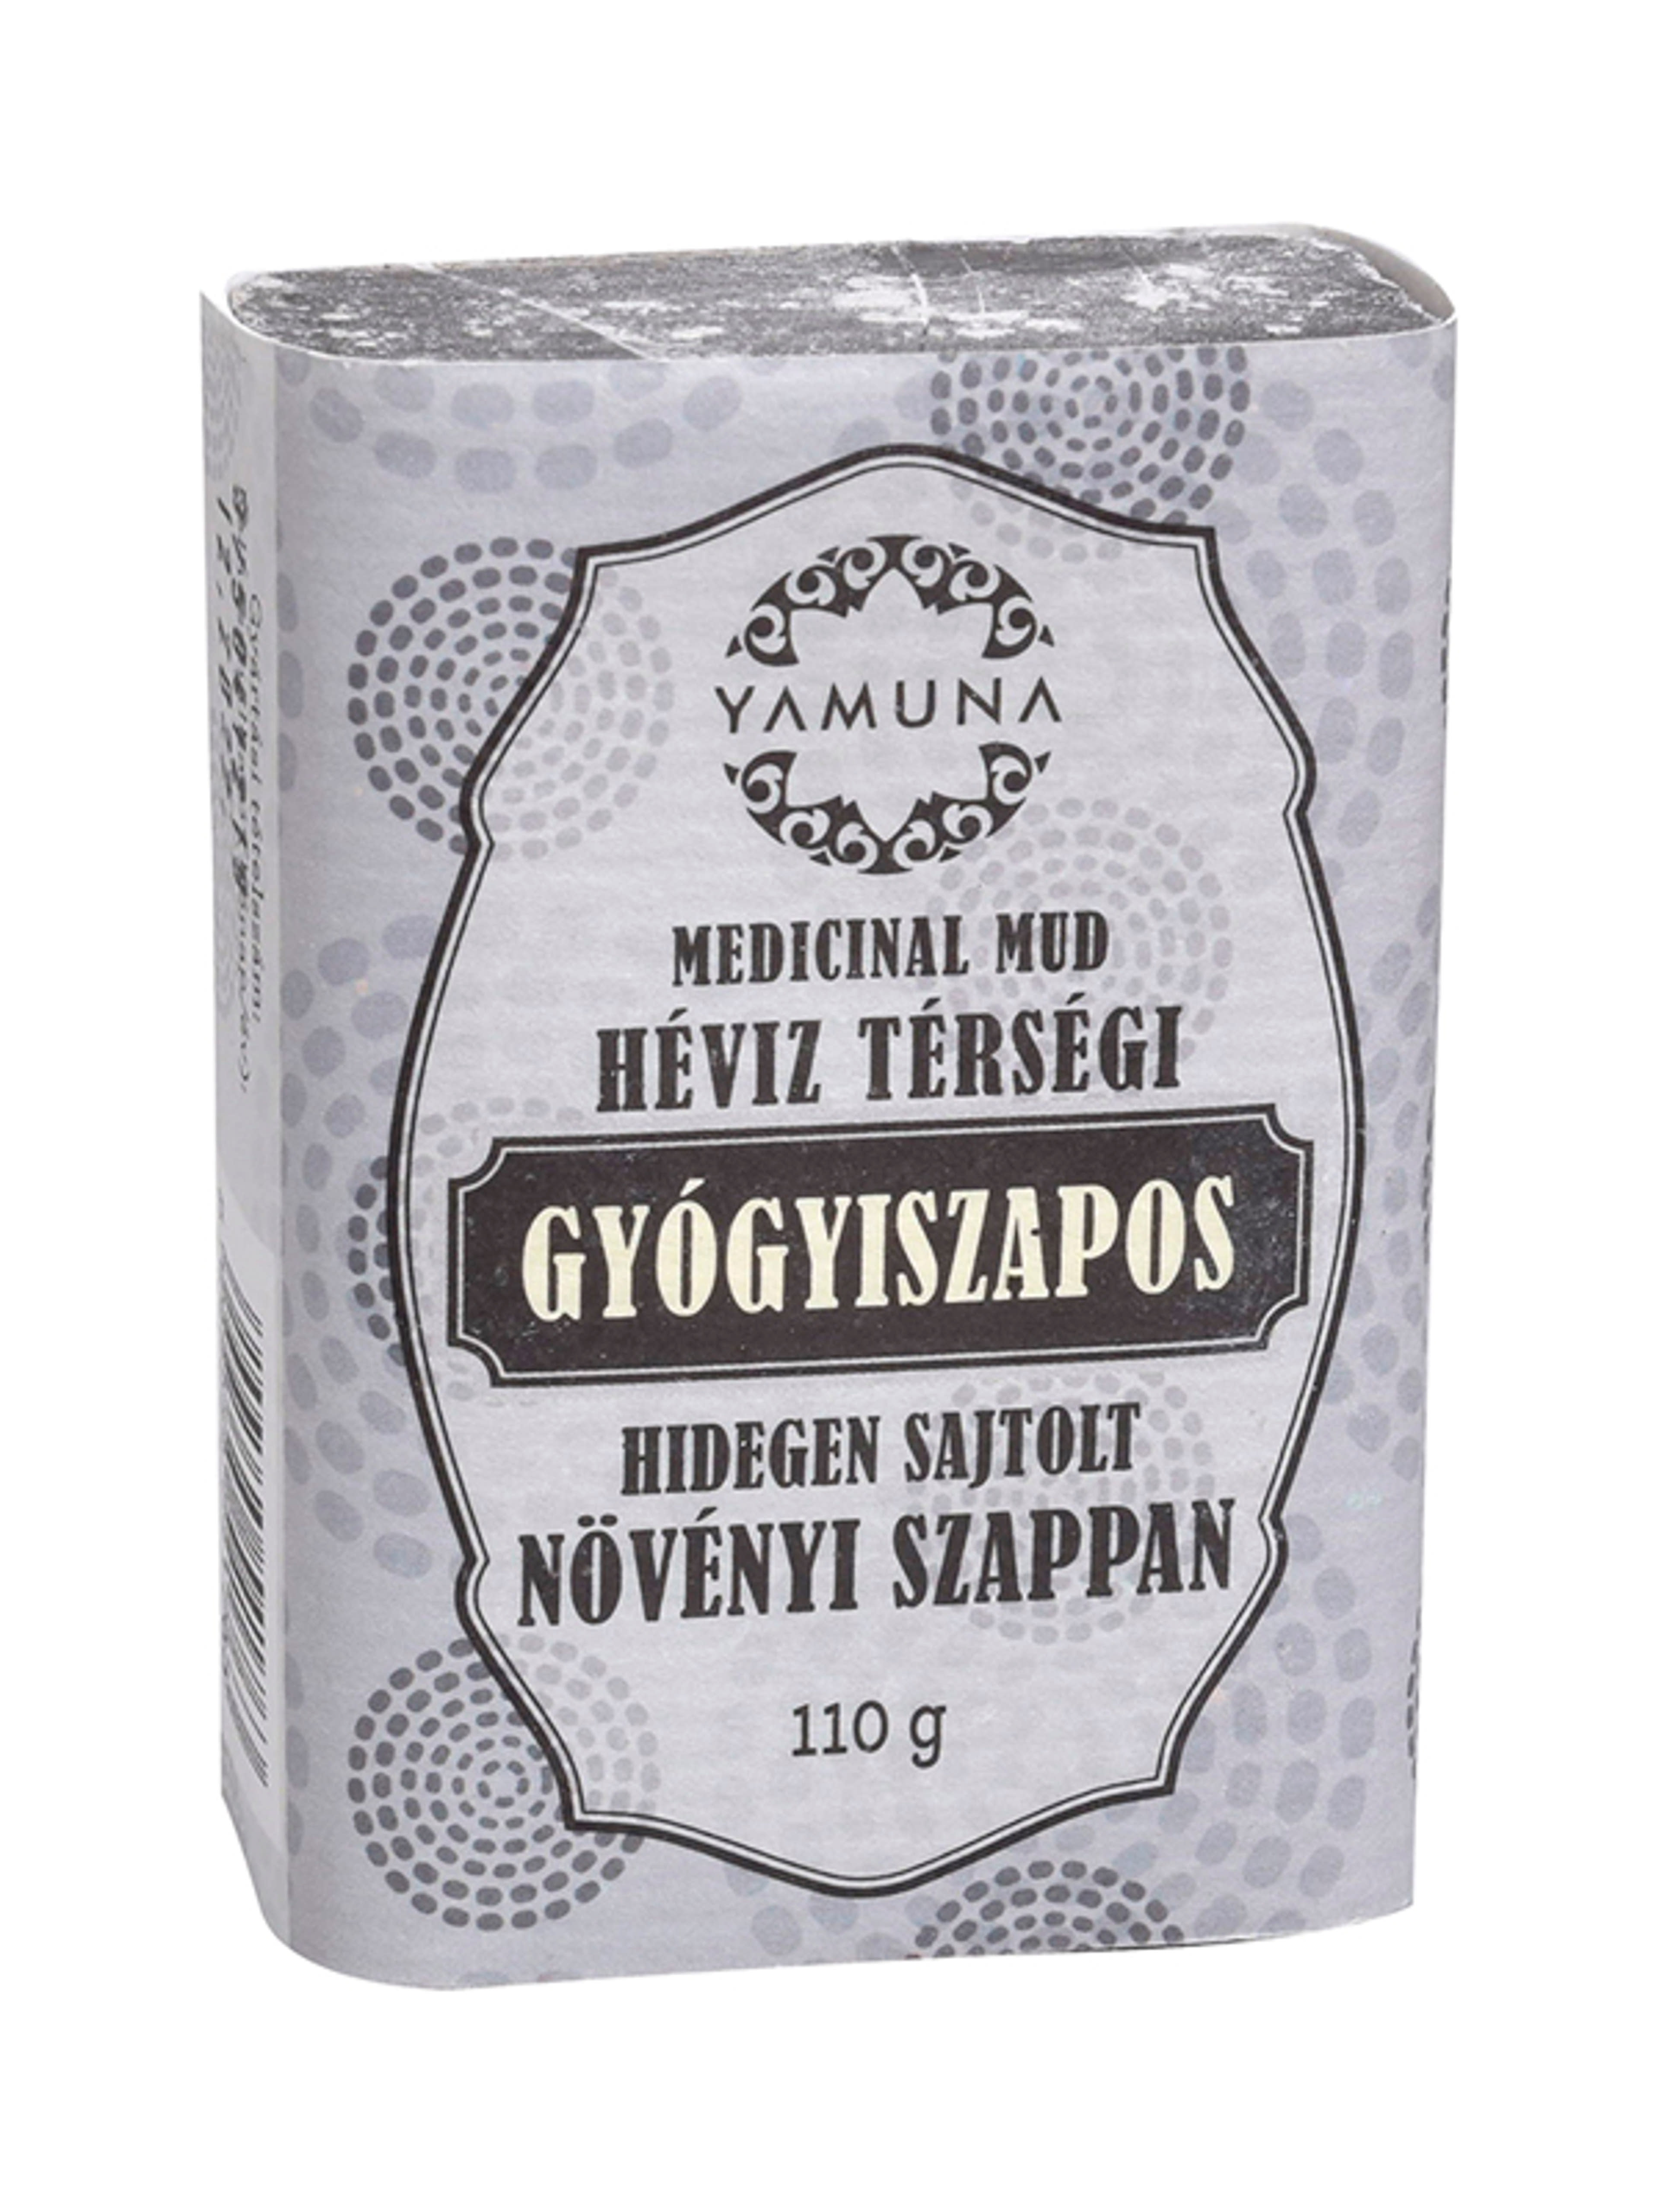 Yamuna fekete szappan hévizi gyógyiszappal - 110 g